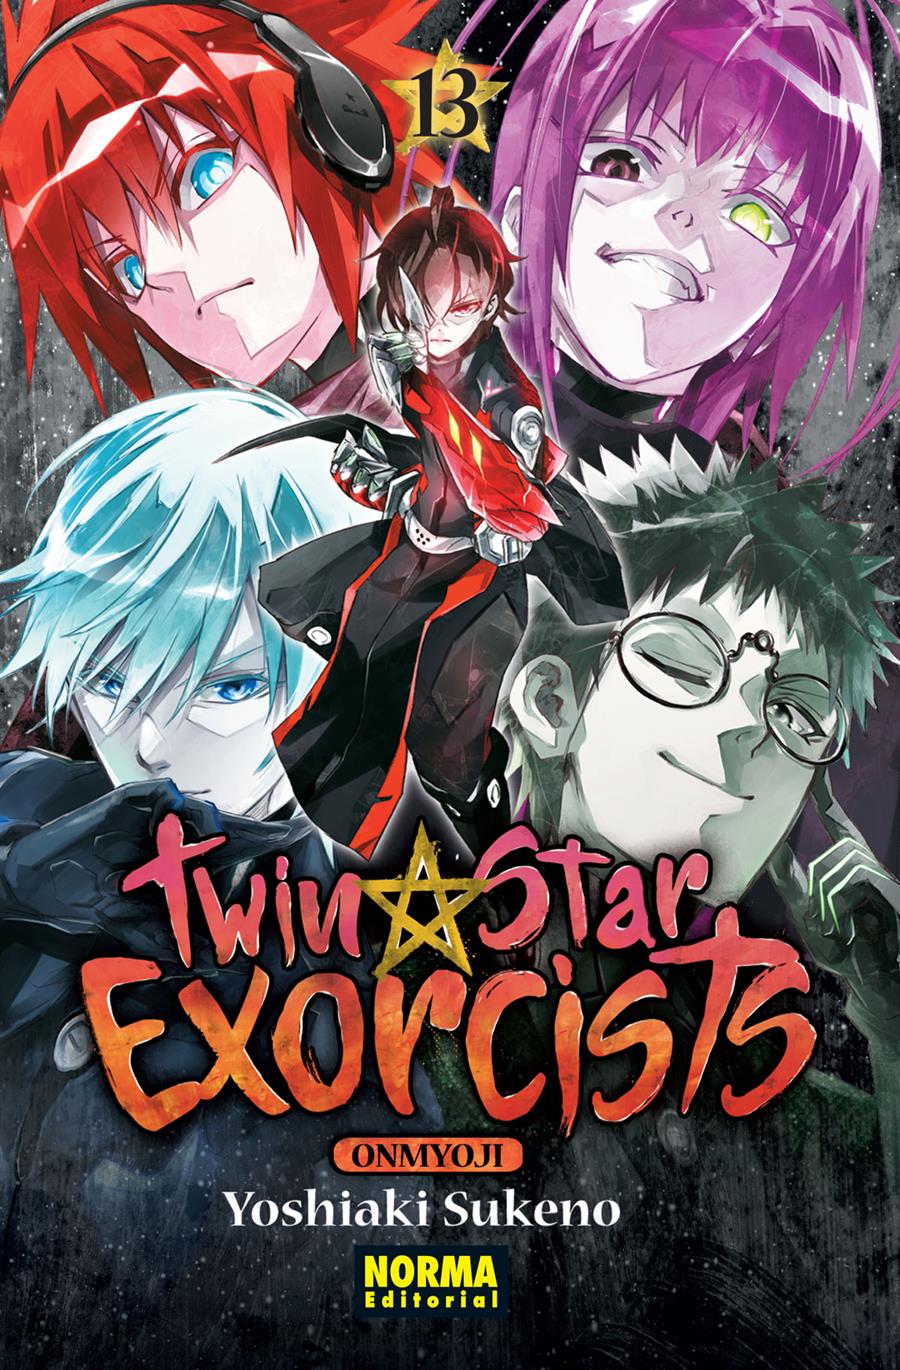 Twin Star Exorcists: Onmyouji 13 | N0818-NOR28 | Yoshiaki Sukeno | Terra de Còmic - Tu tienda de cómics online especializada en cómics, manga y merchandising